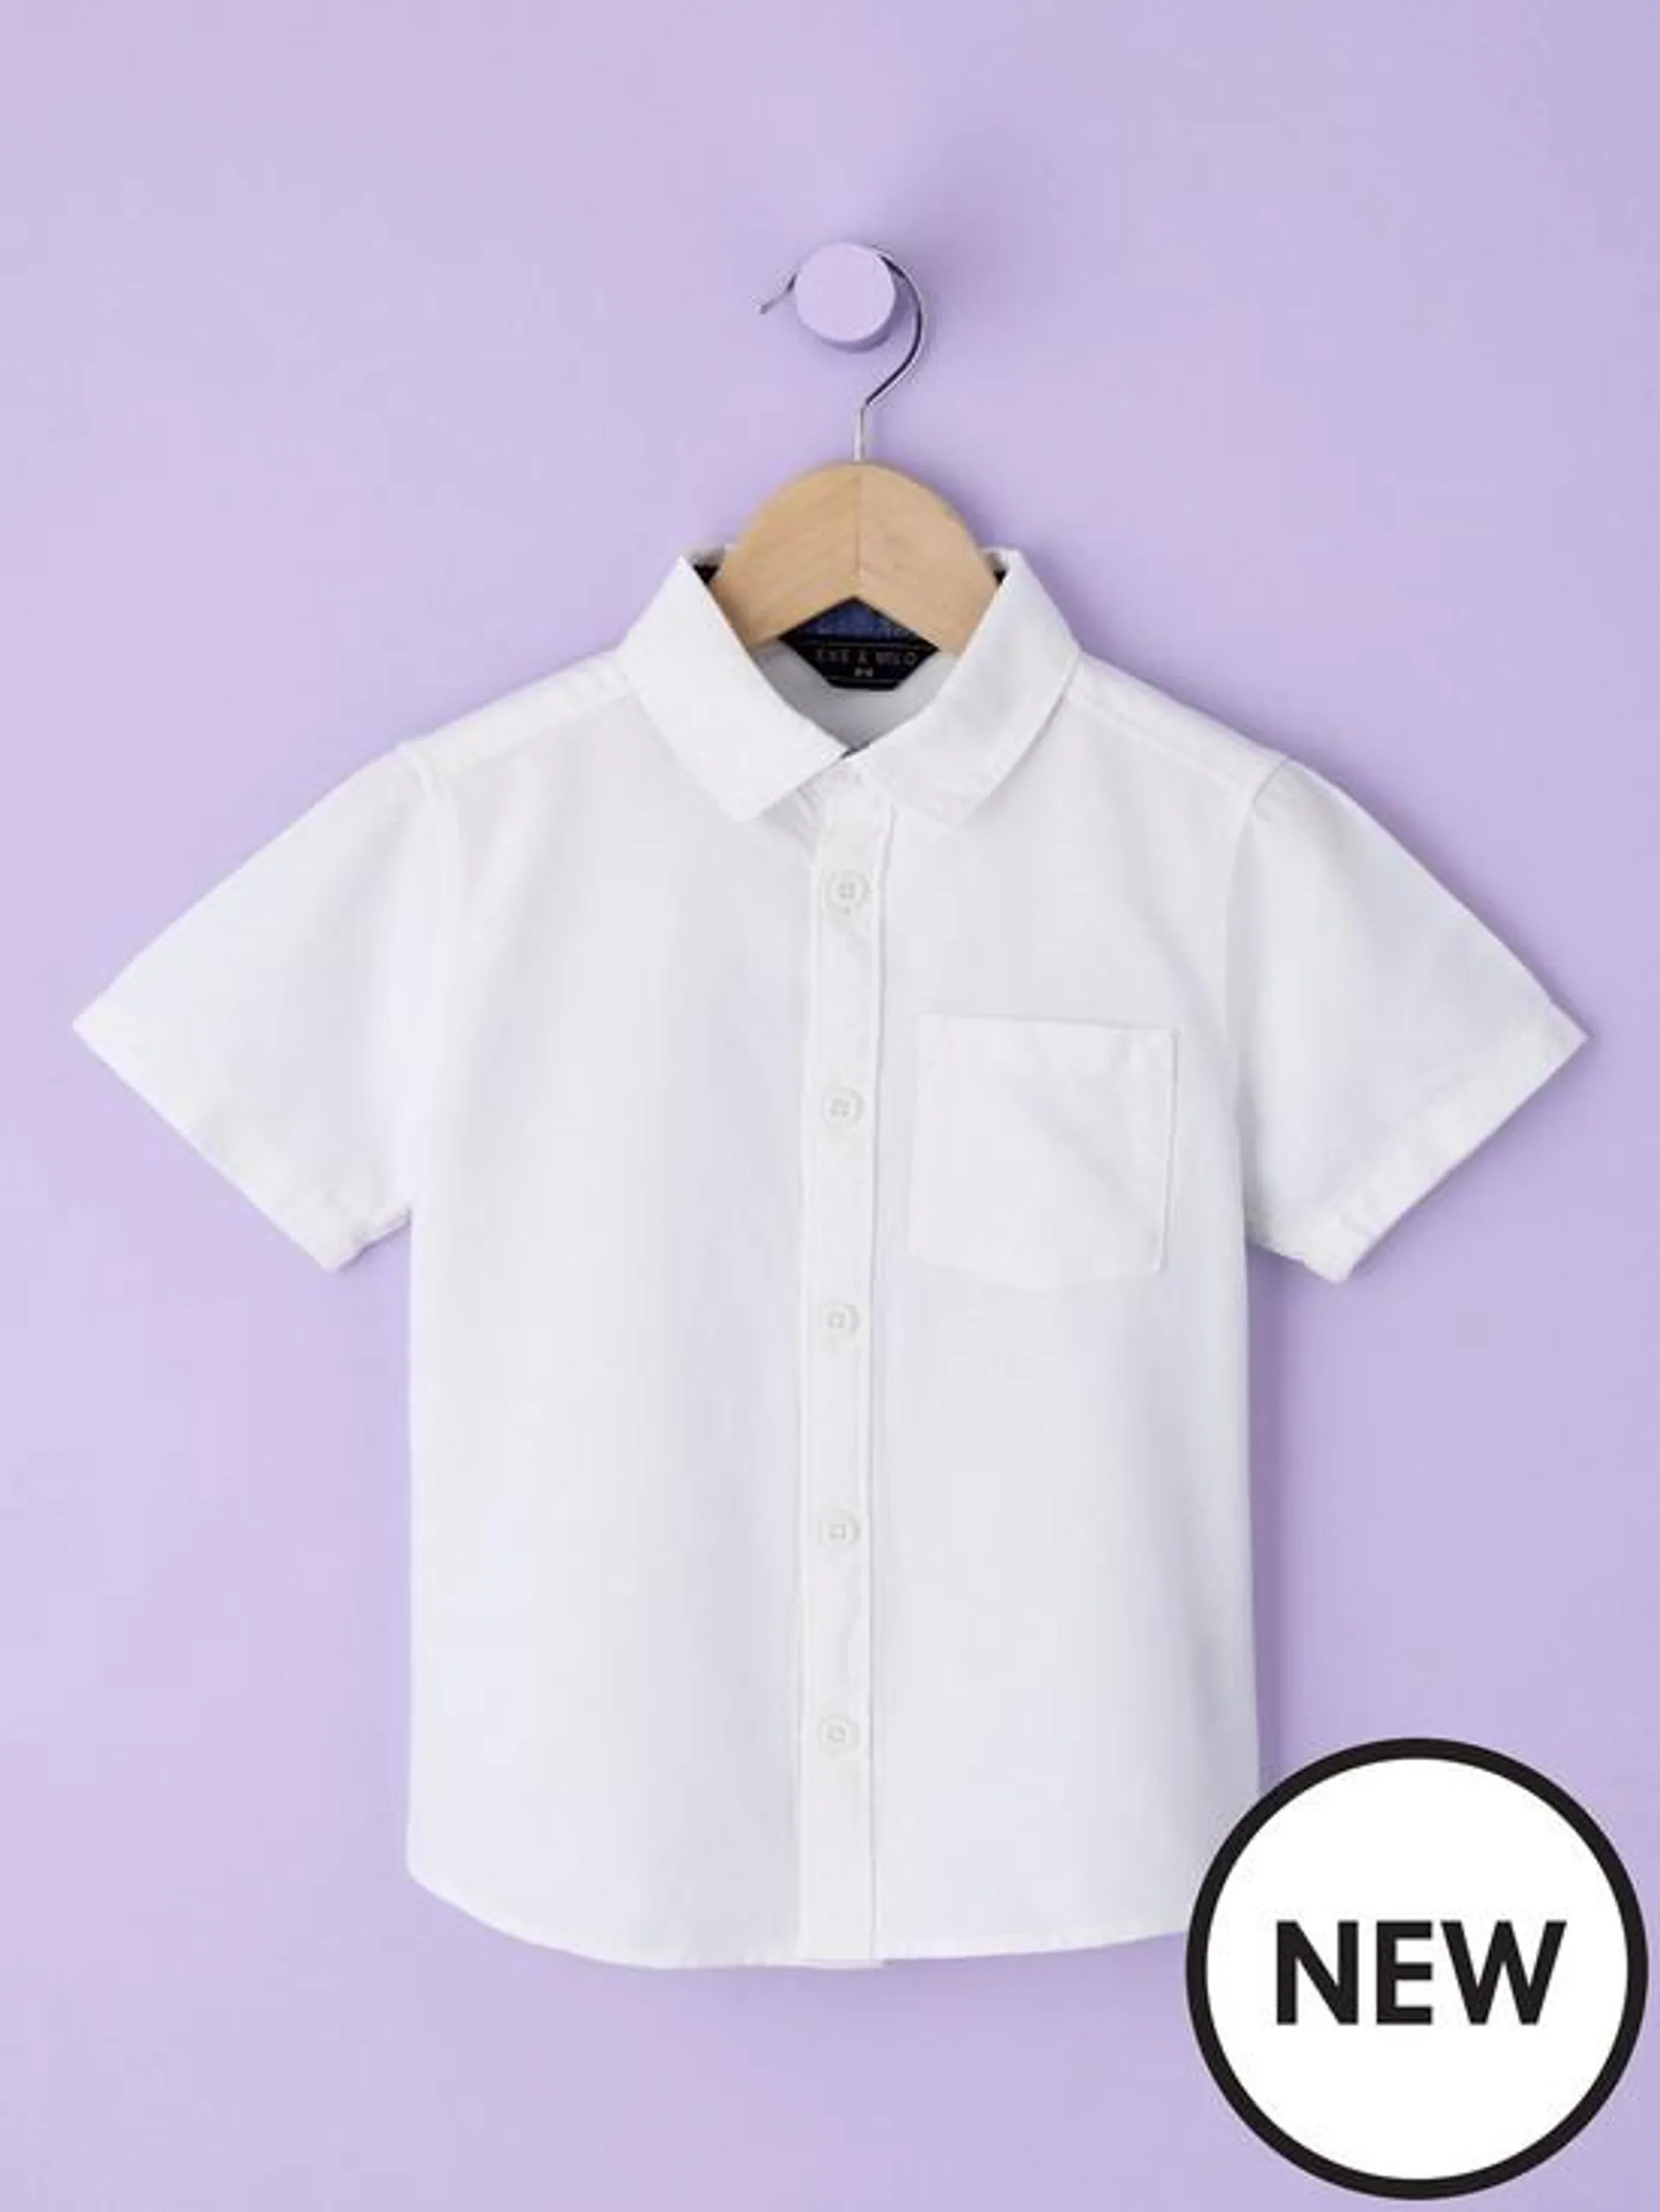 Eve and Milo Boys Short Sleeve White Oxford Shirt